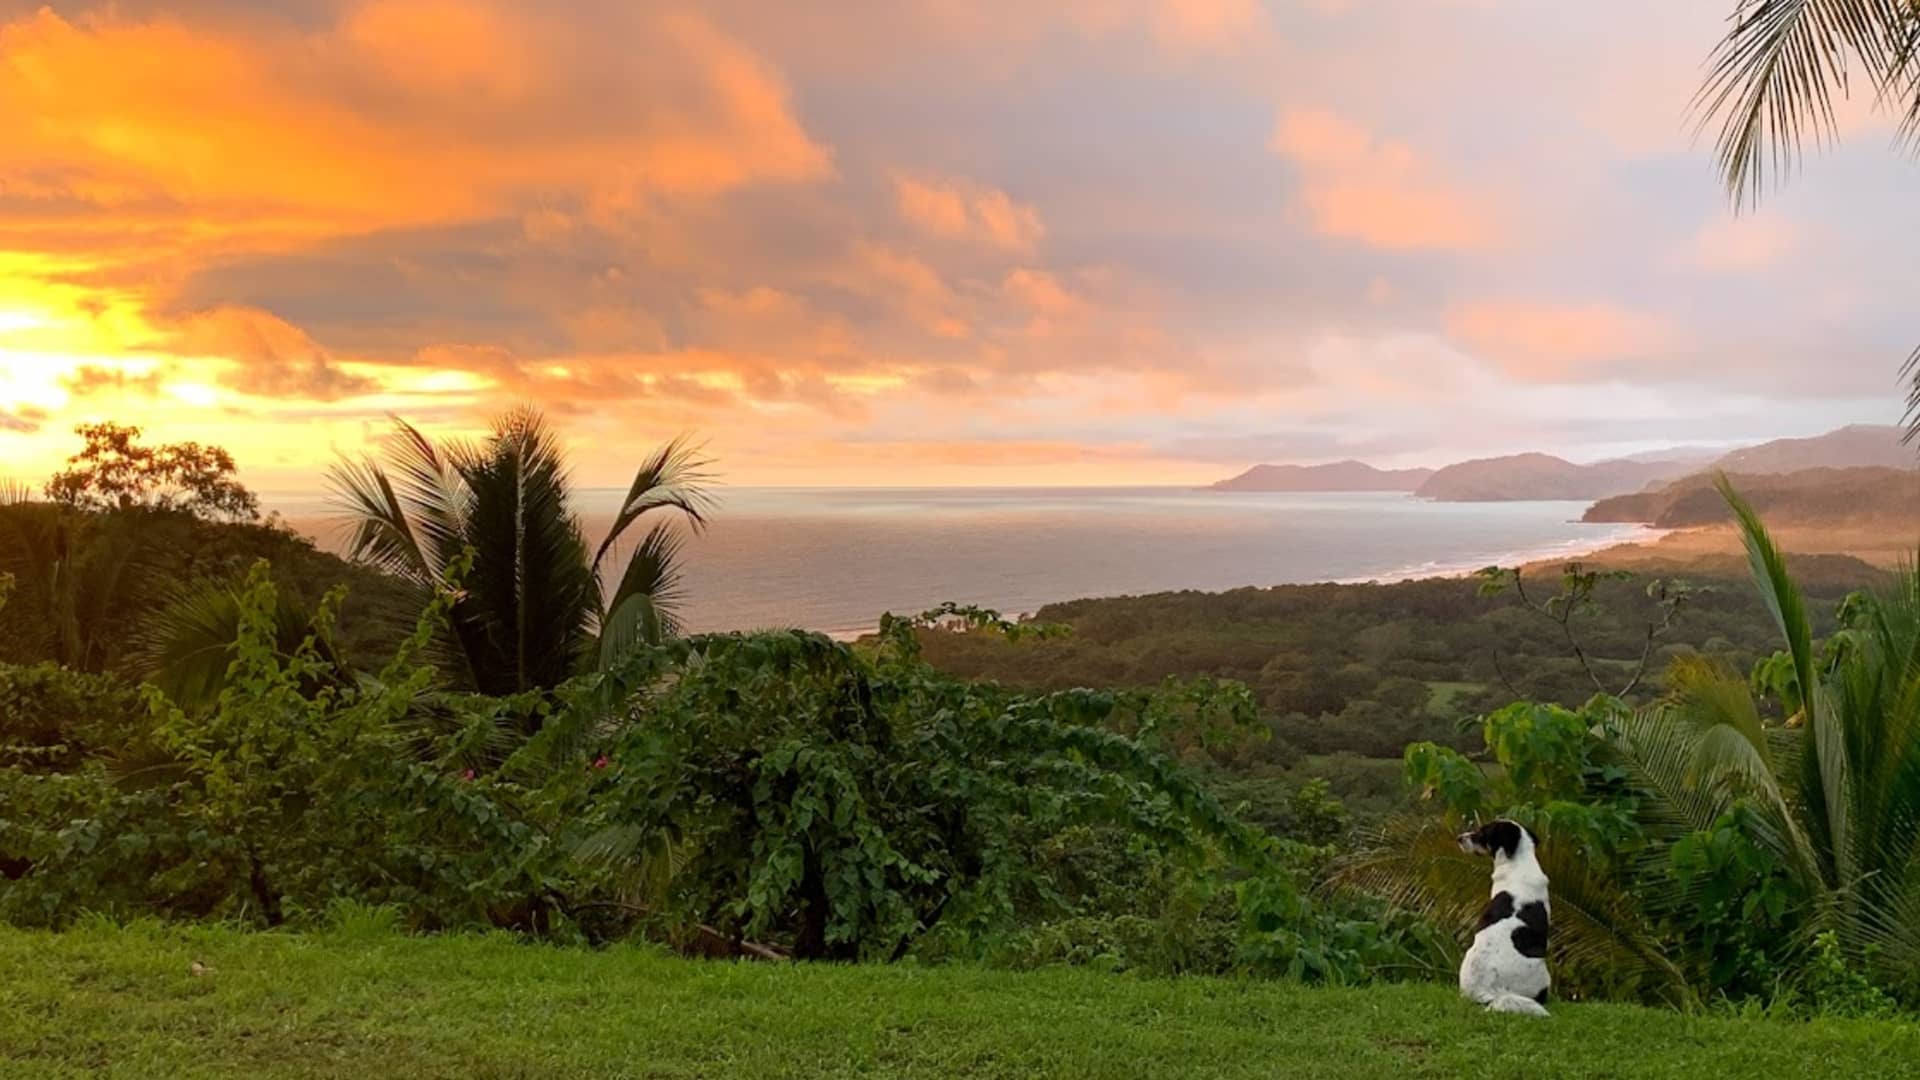 The Ward-Hoppers' dog, Heidi, enjoys the view from their backyard in Nicoya.